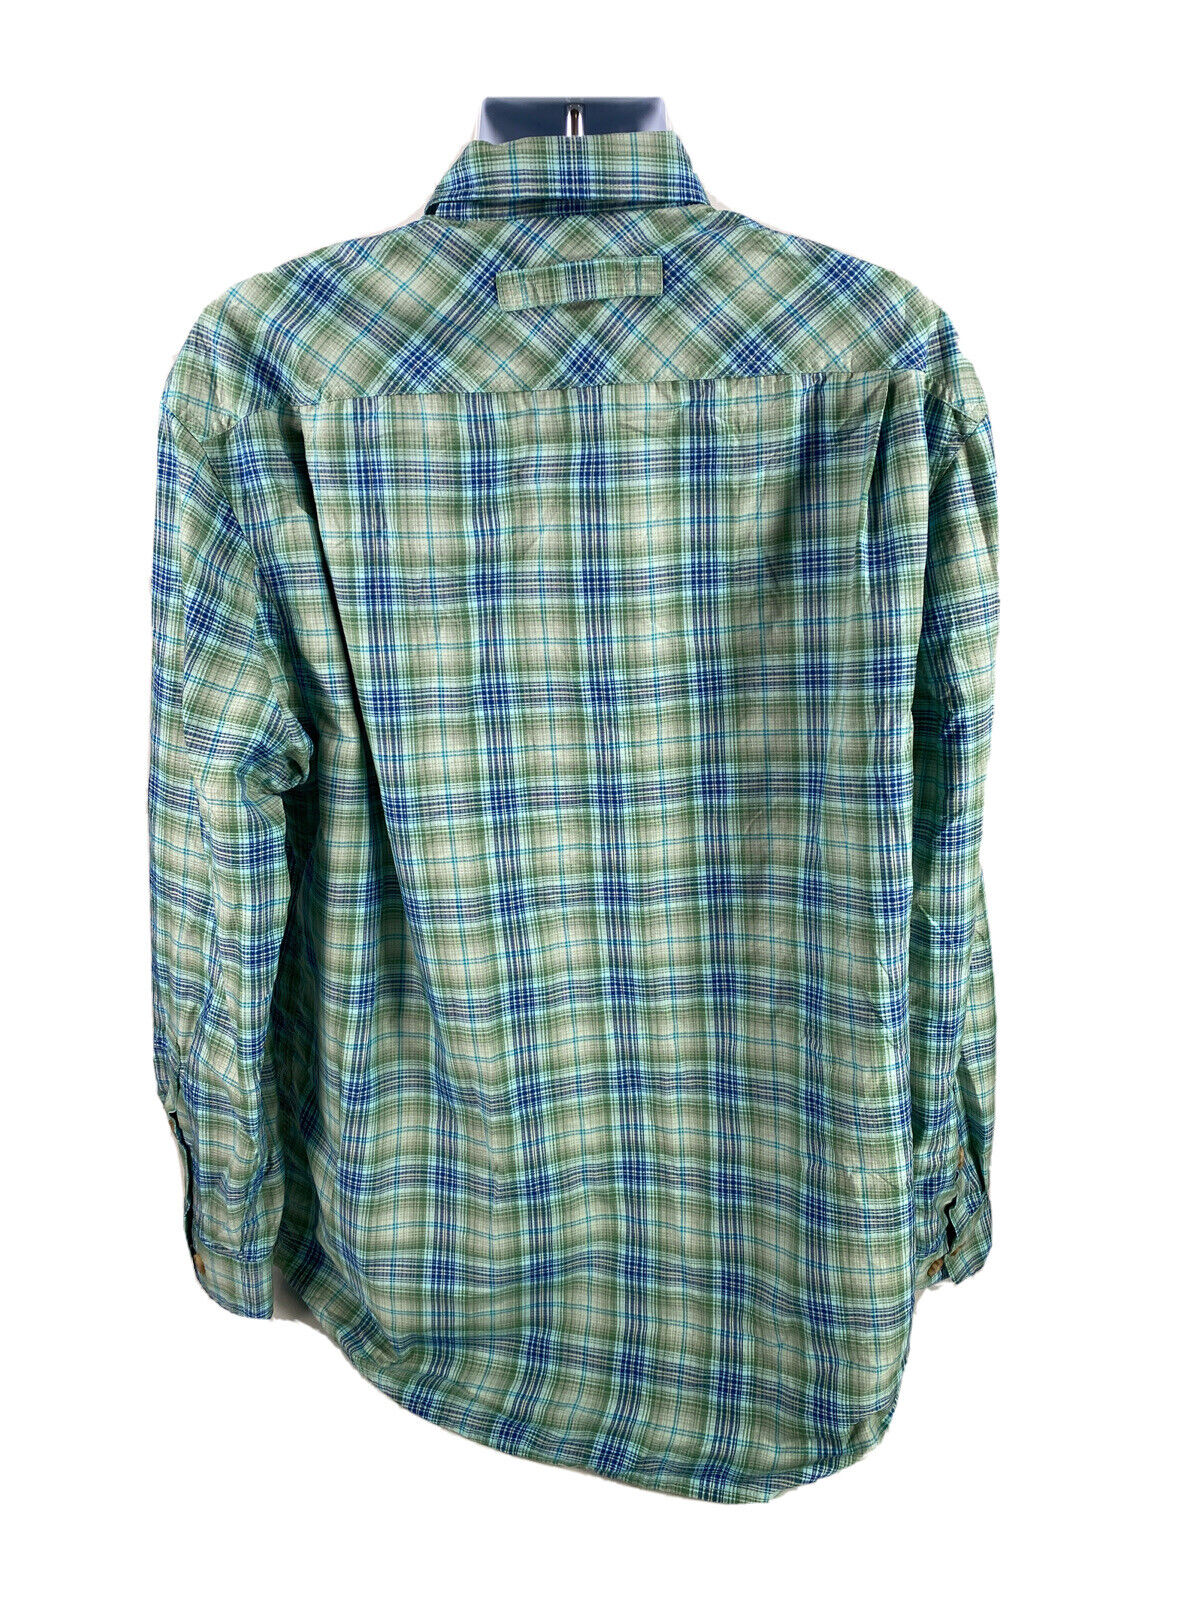 Duluth Trading Men's Green Plaid Standard Fit Button Up Shirt - L Tall